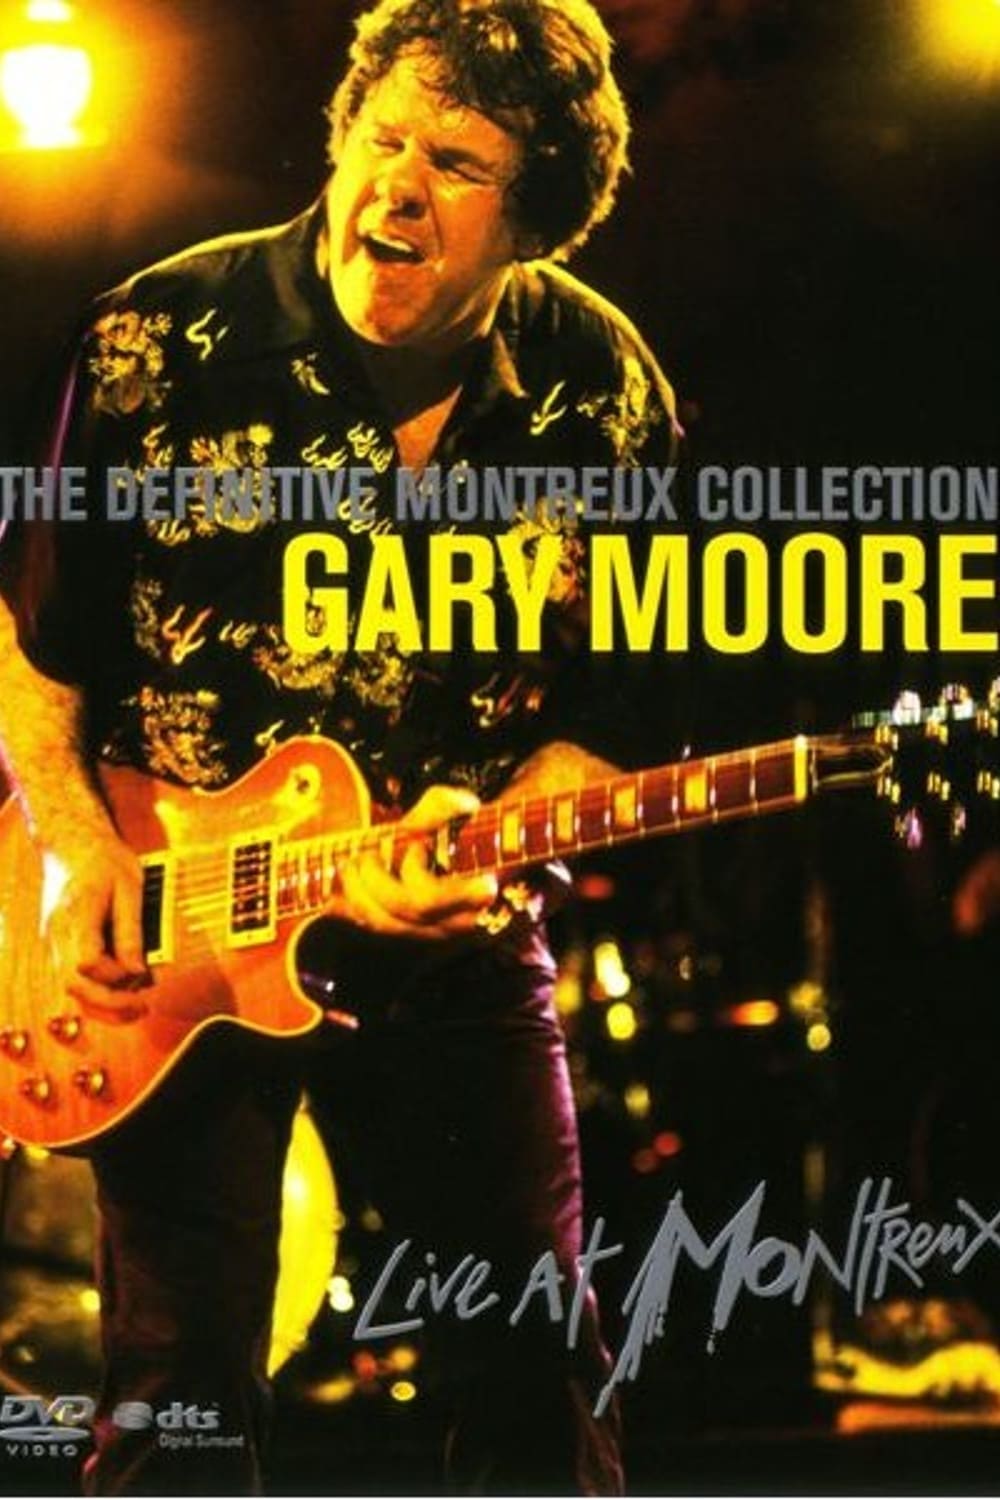 Gary Moore: Live at Montreux 1997 - Bonus Tracks